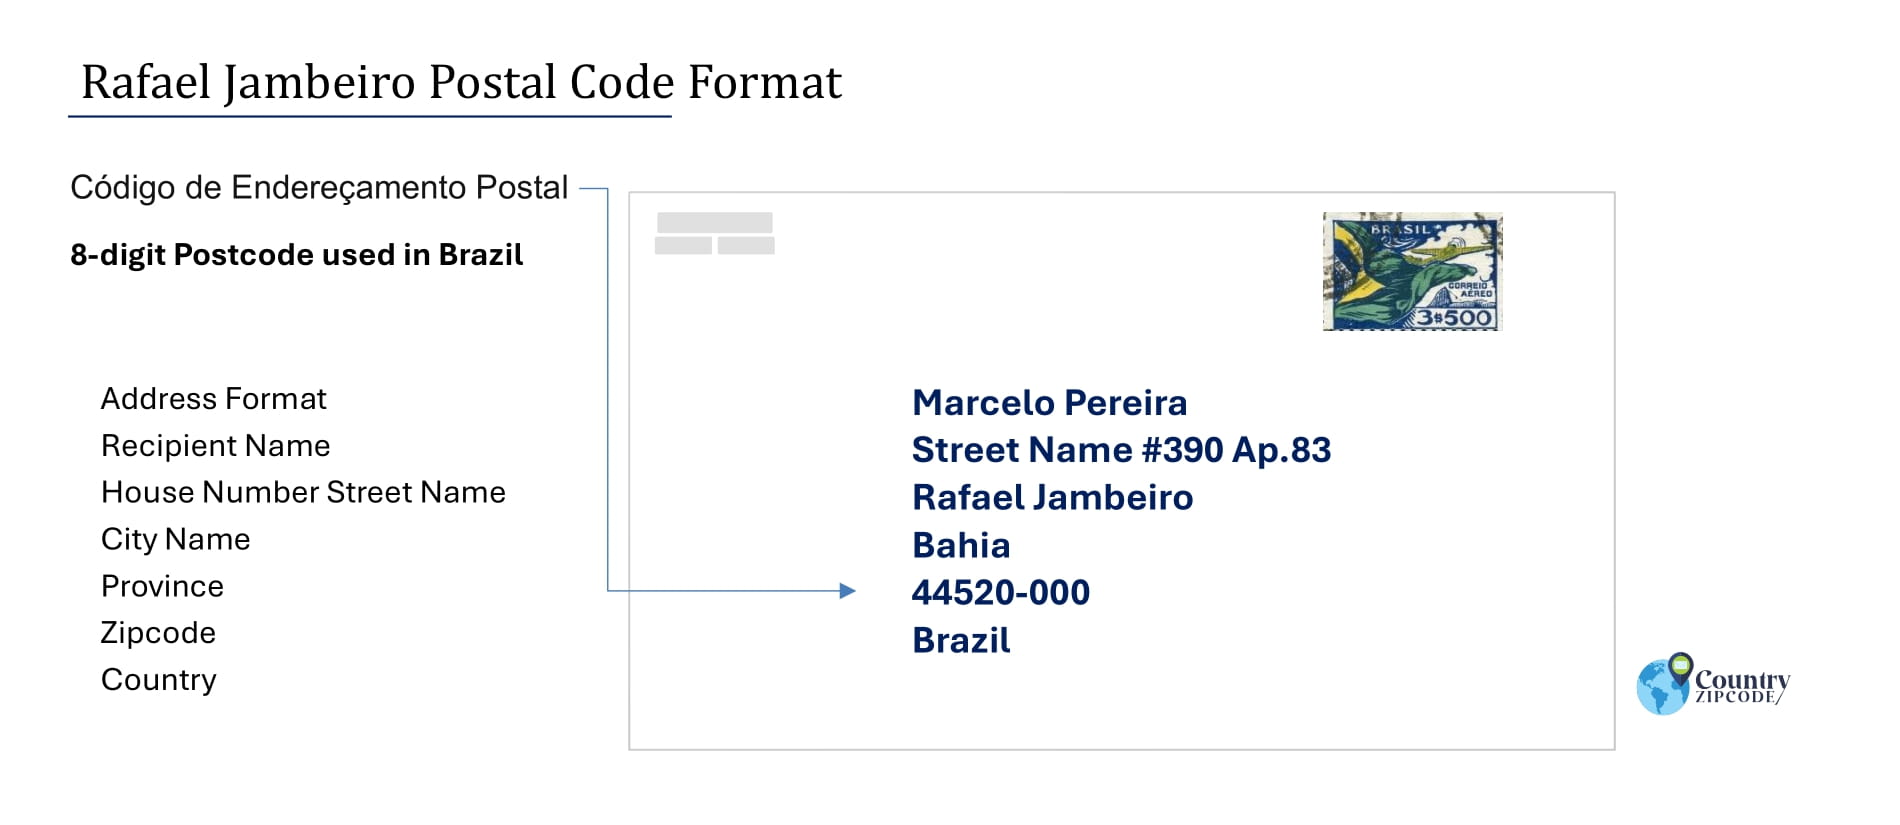 Example of Codigo de Enderecamento Postal and Address format of Rafael Jambeiro Brazil